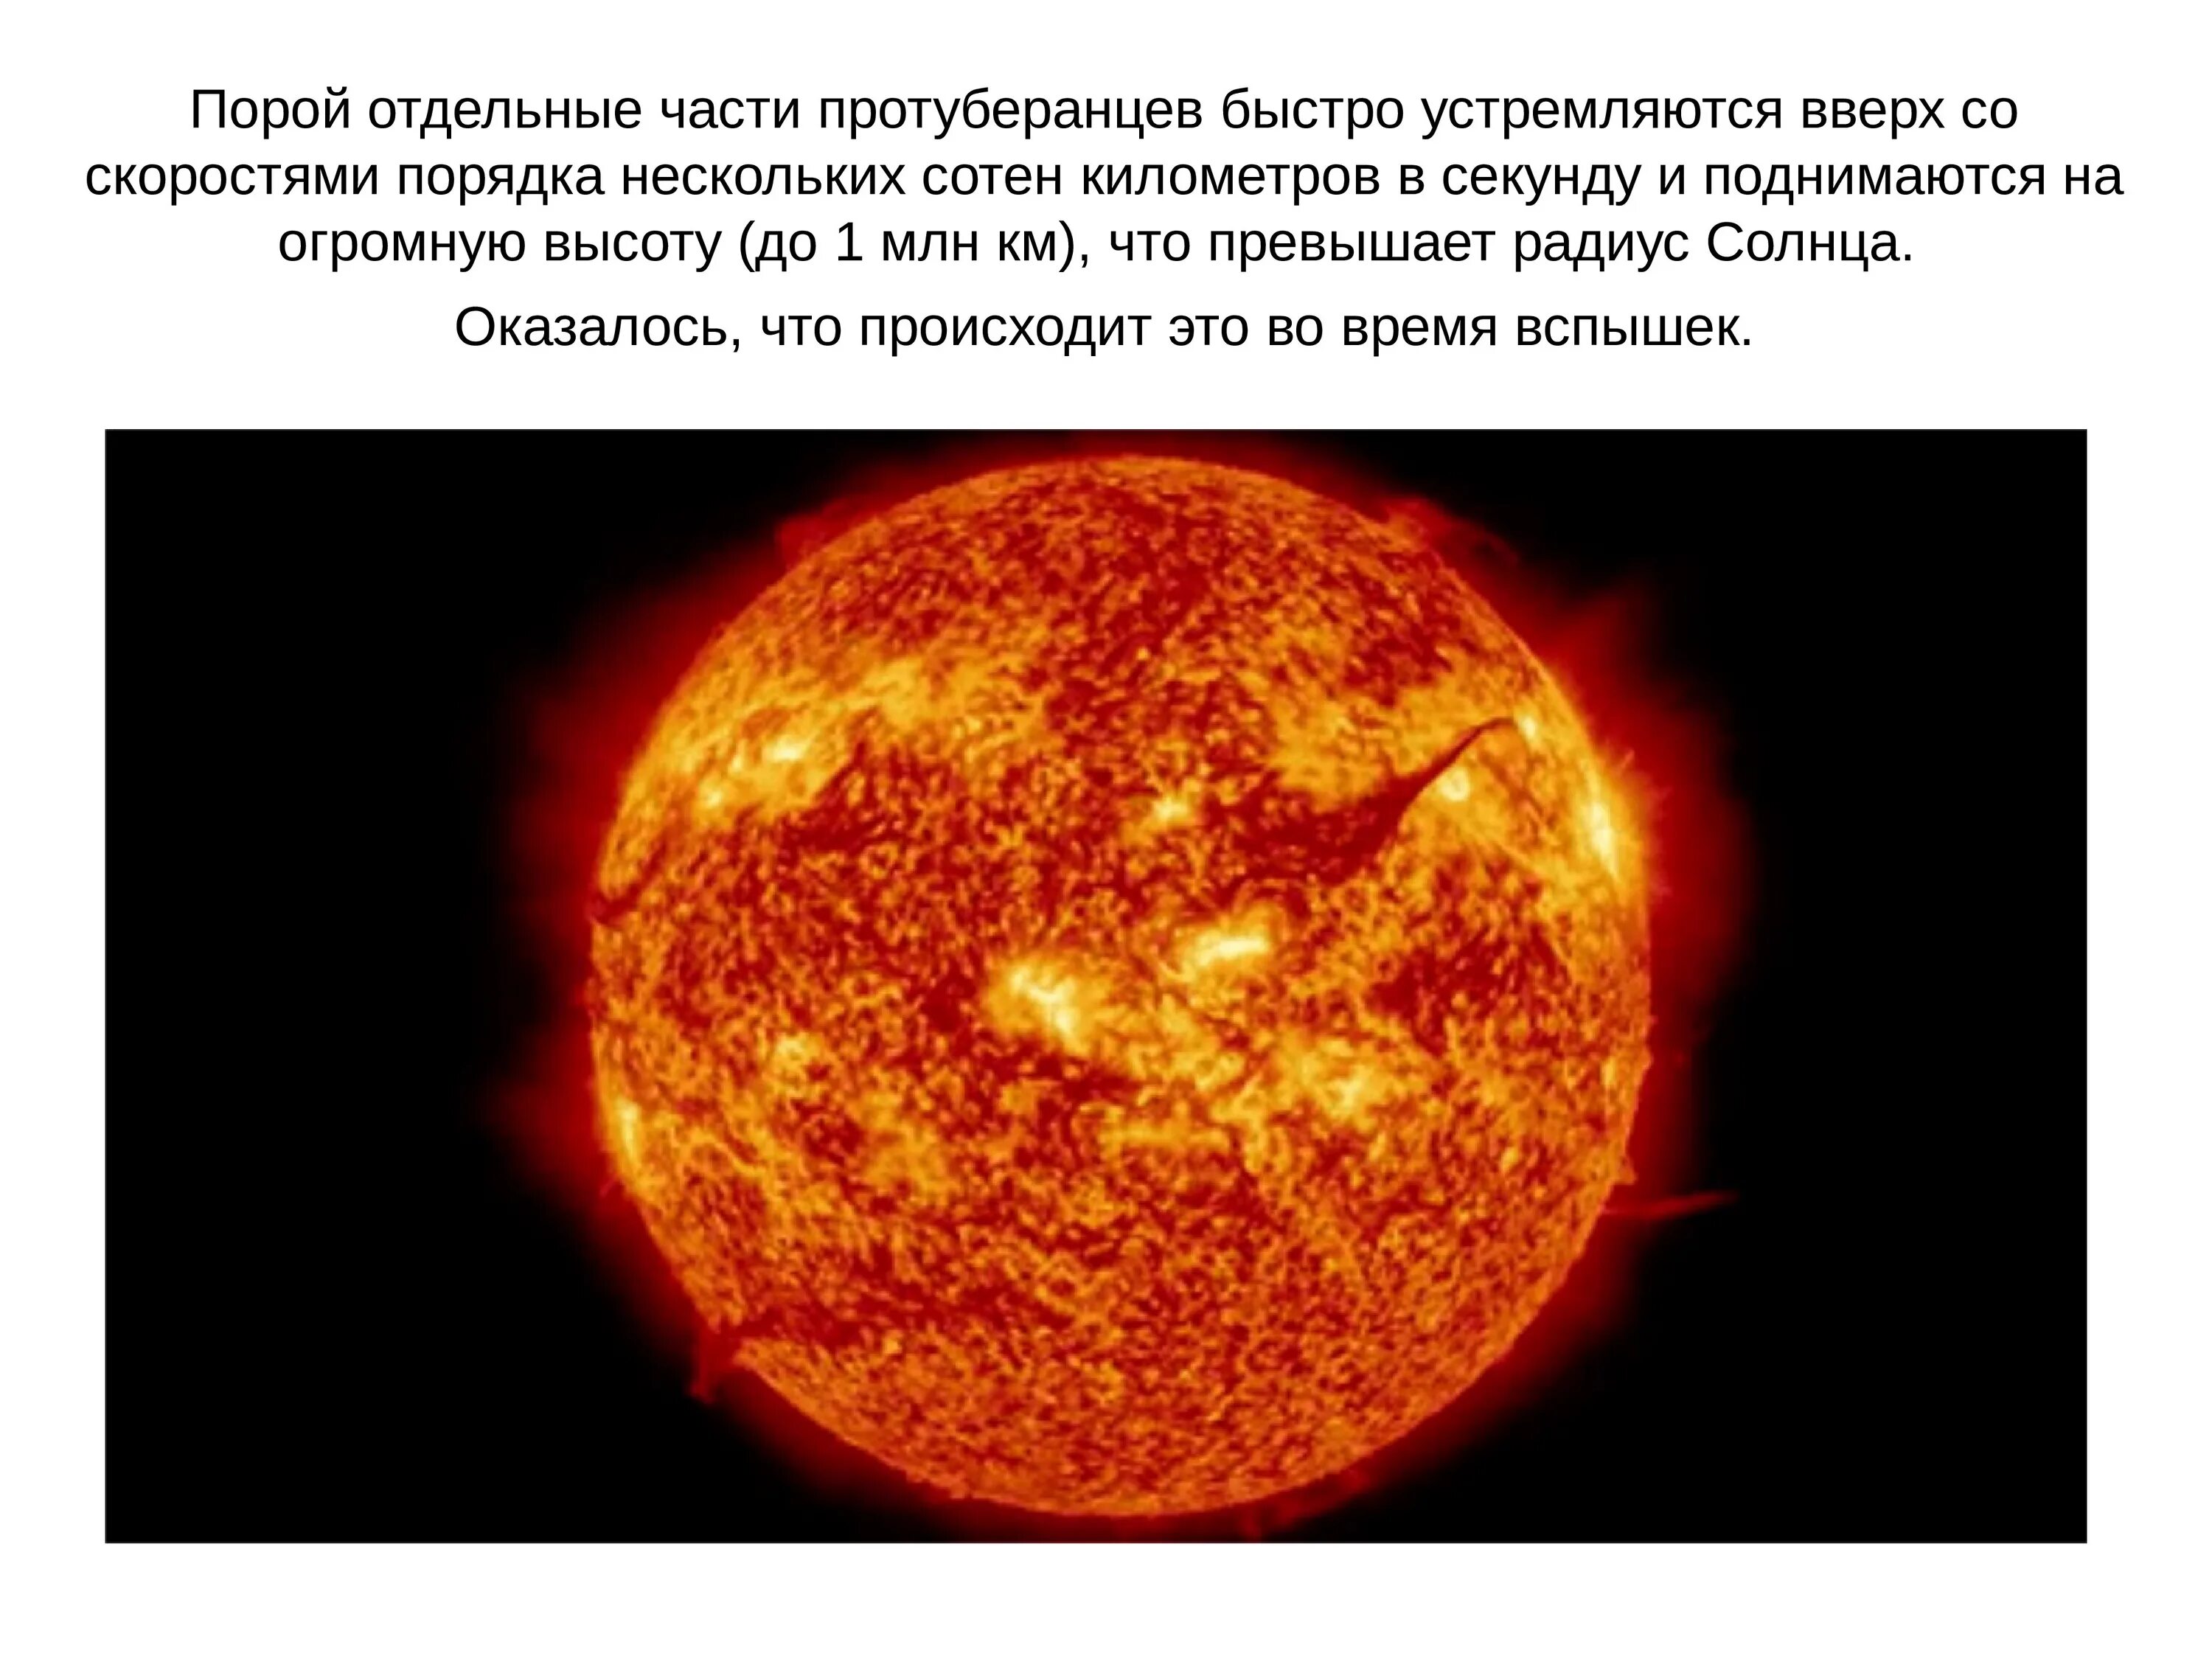 Солнце и звезды астрономия 11 класс. Атмосфера солнца и Солнечная активность презентация. Солнечная активность солнце астрономия. Строение атмосферы солнца. Атмосфера солнца презентация.